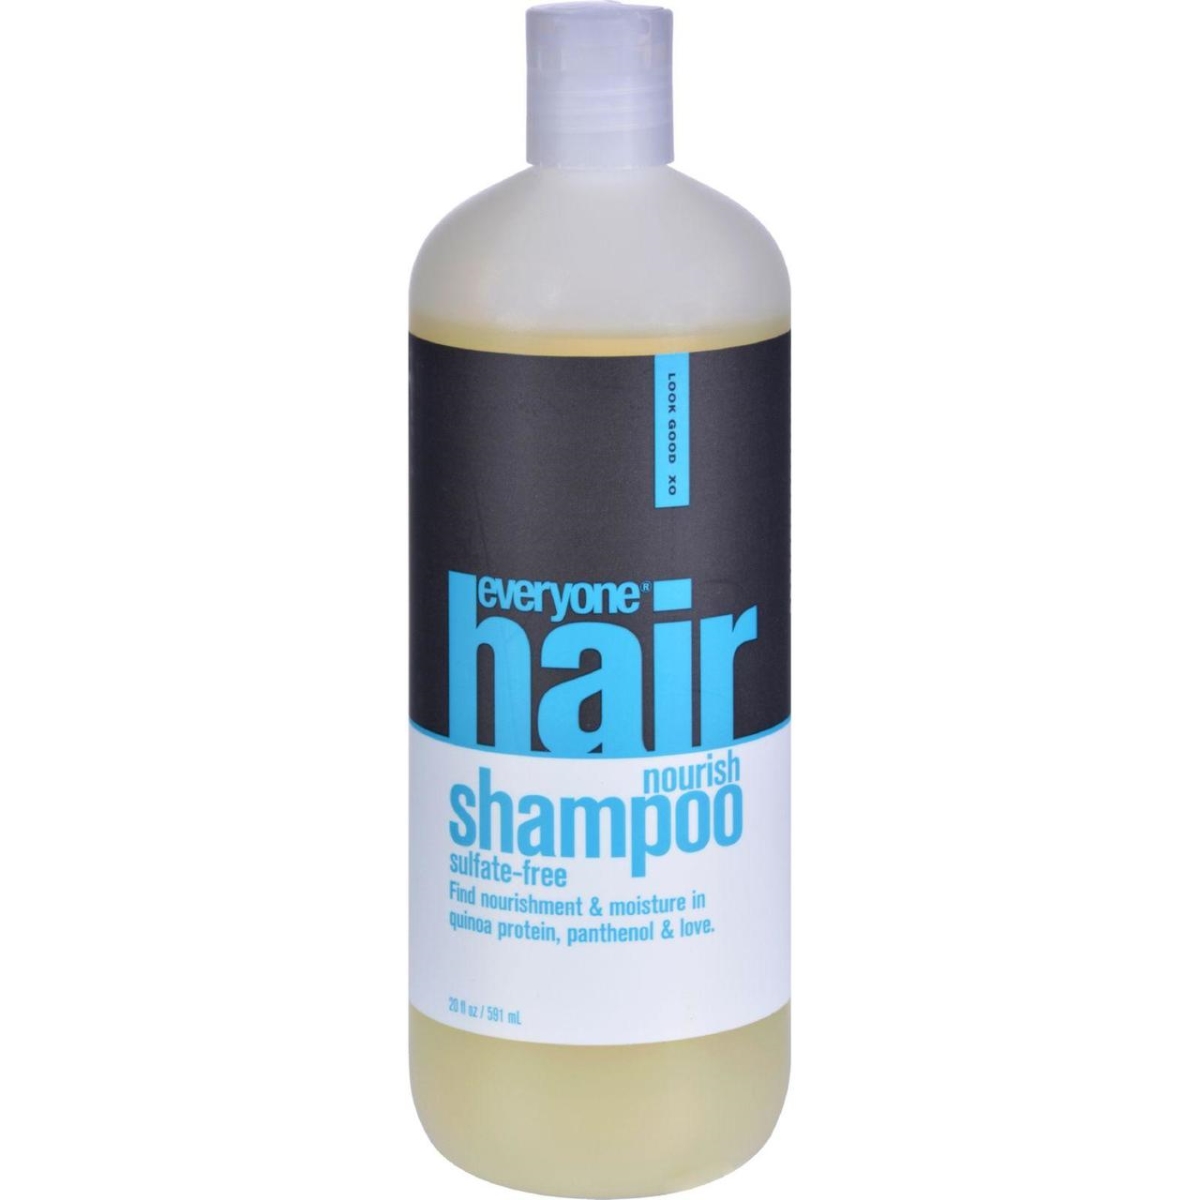 Hg1513746 20 Fl Oz Sulfate Free Nourish Shampoo For Everyone Hair